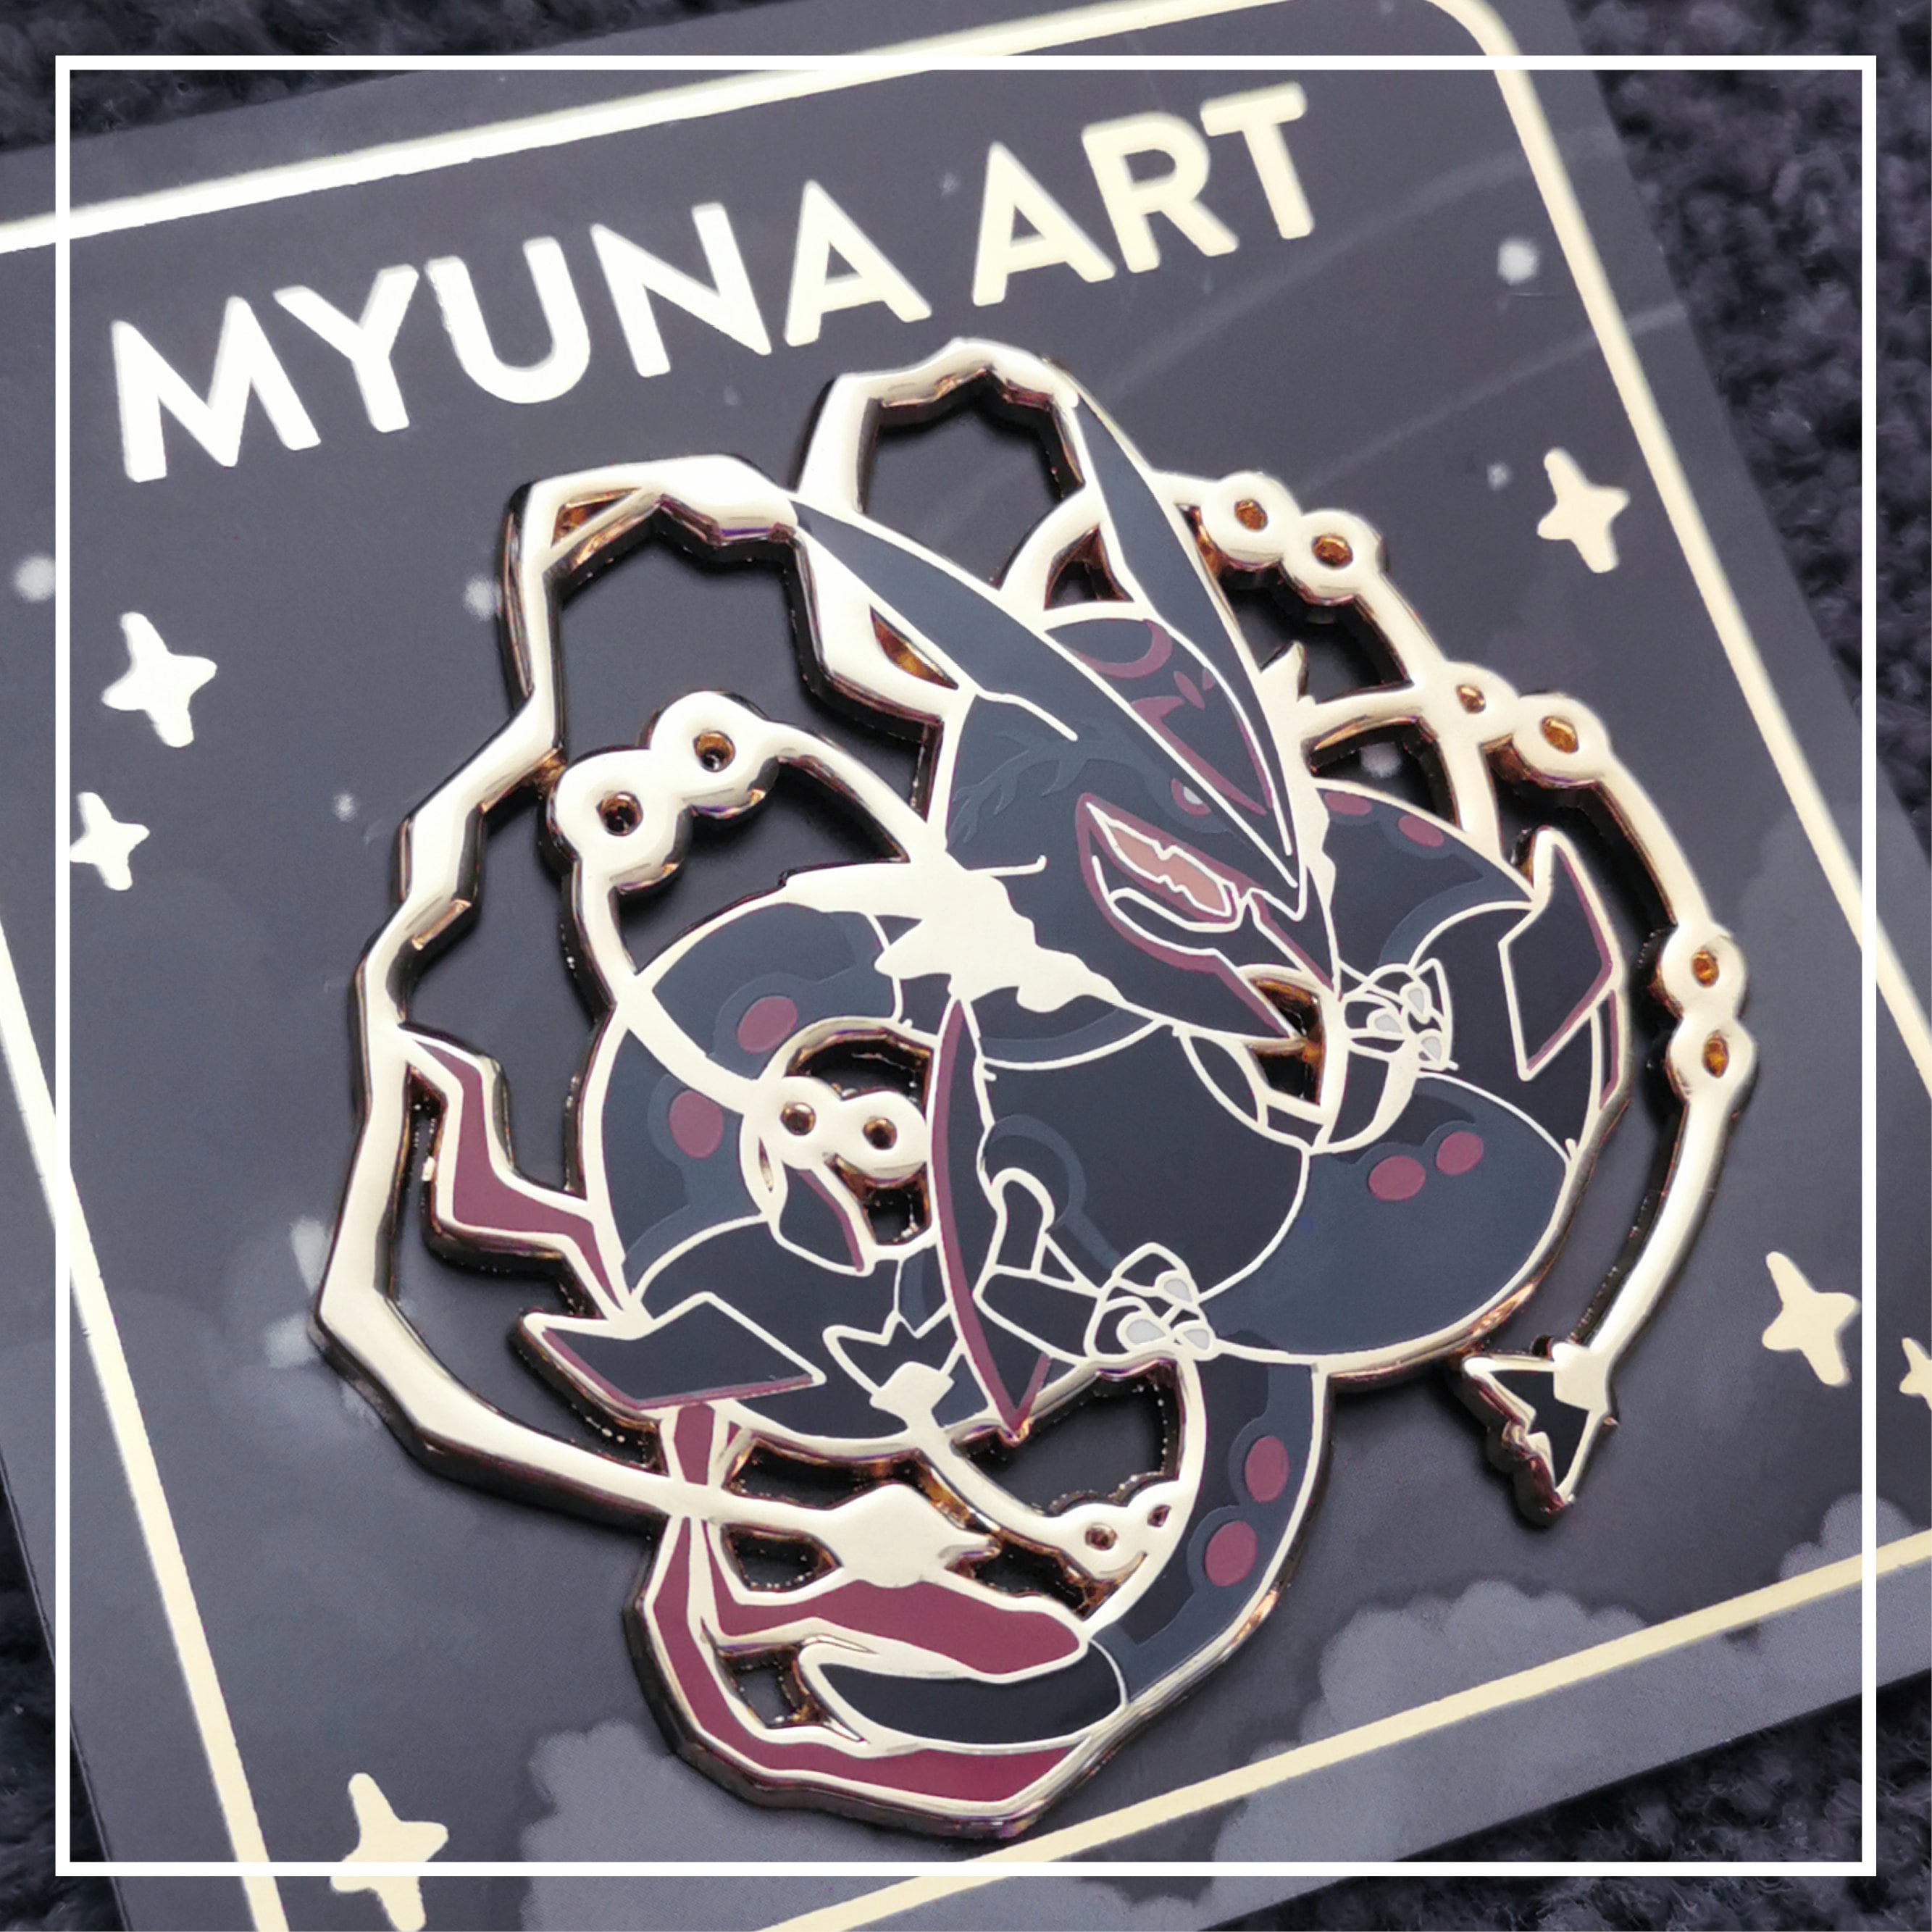 Myuna's XXL Shiny Mega Rayquaza Pin Big Fanart Sky -  Denmark